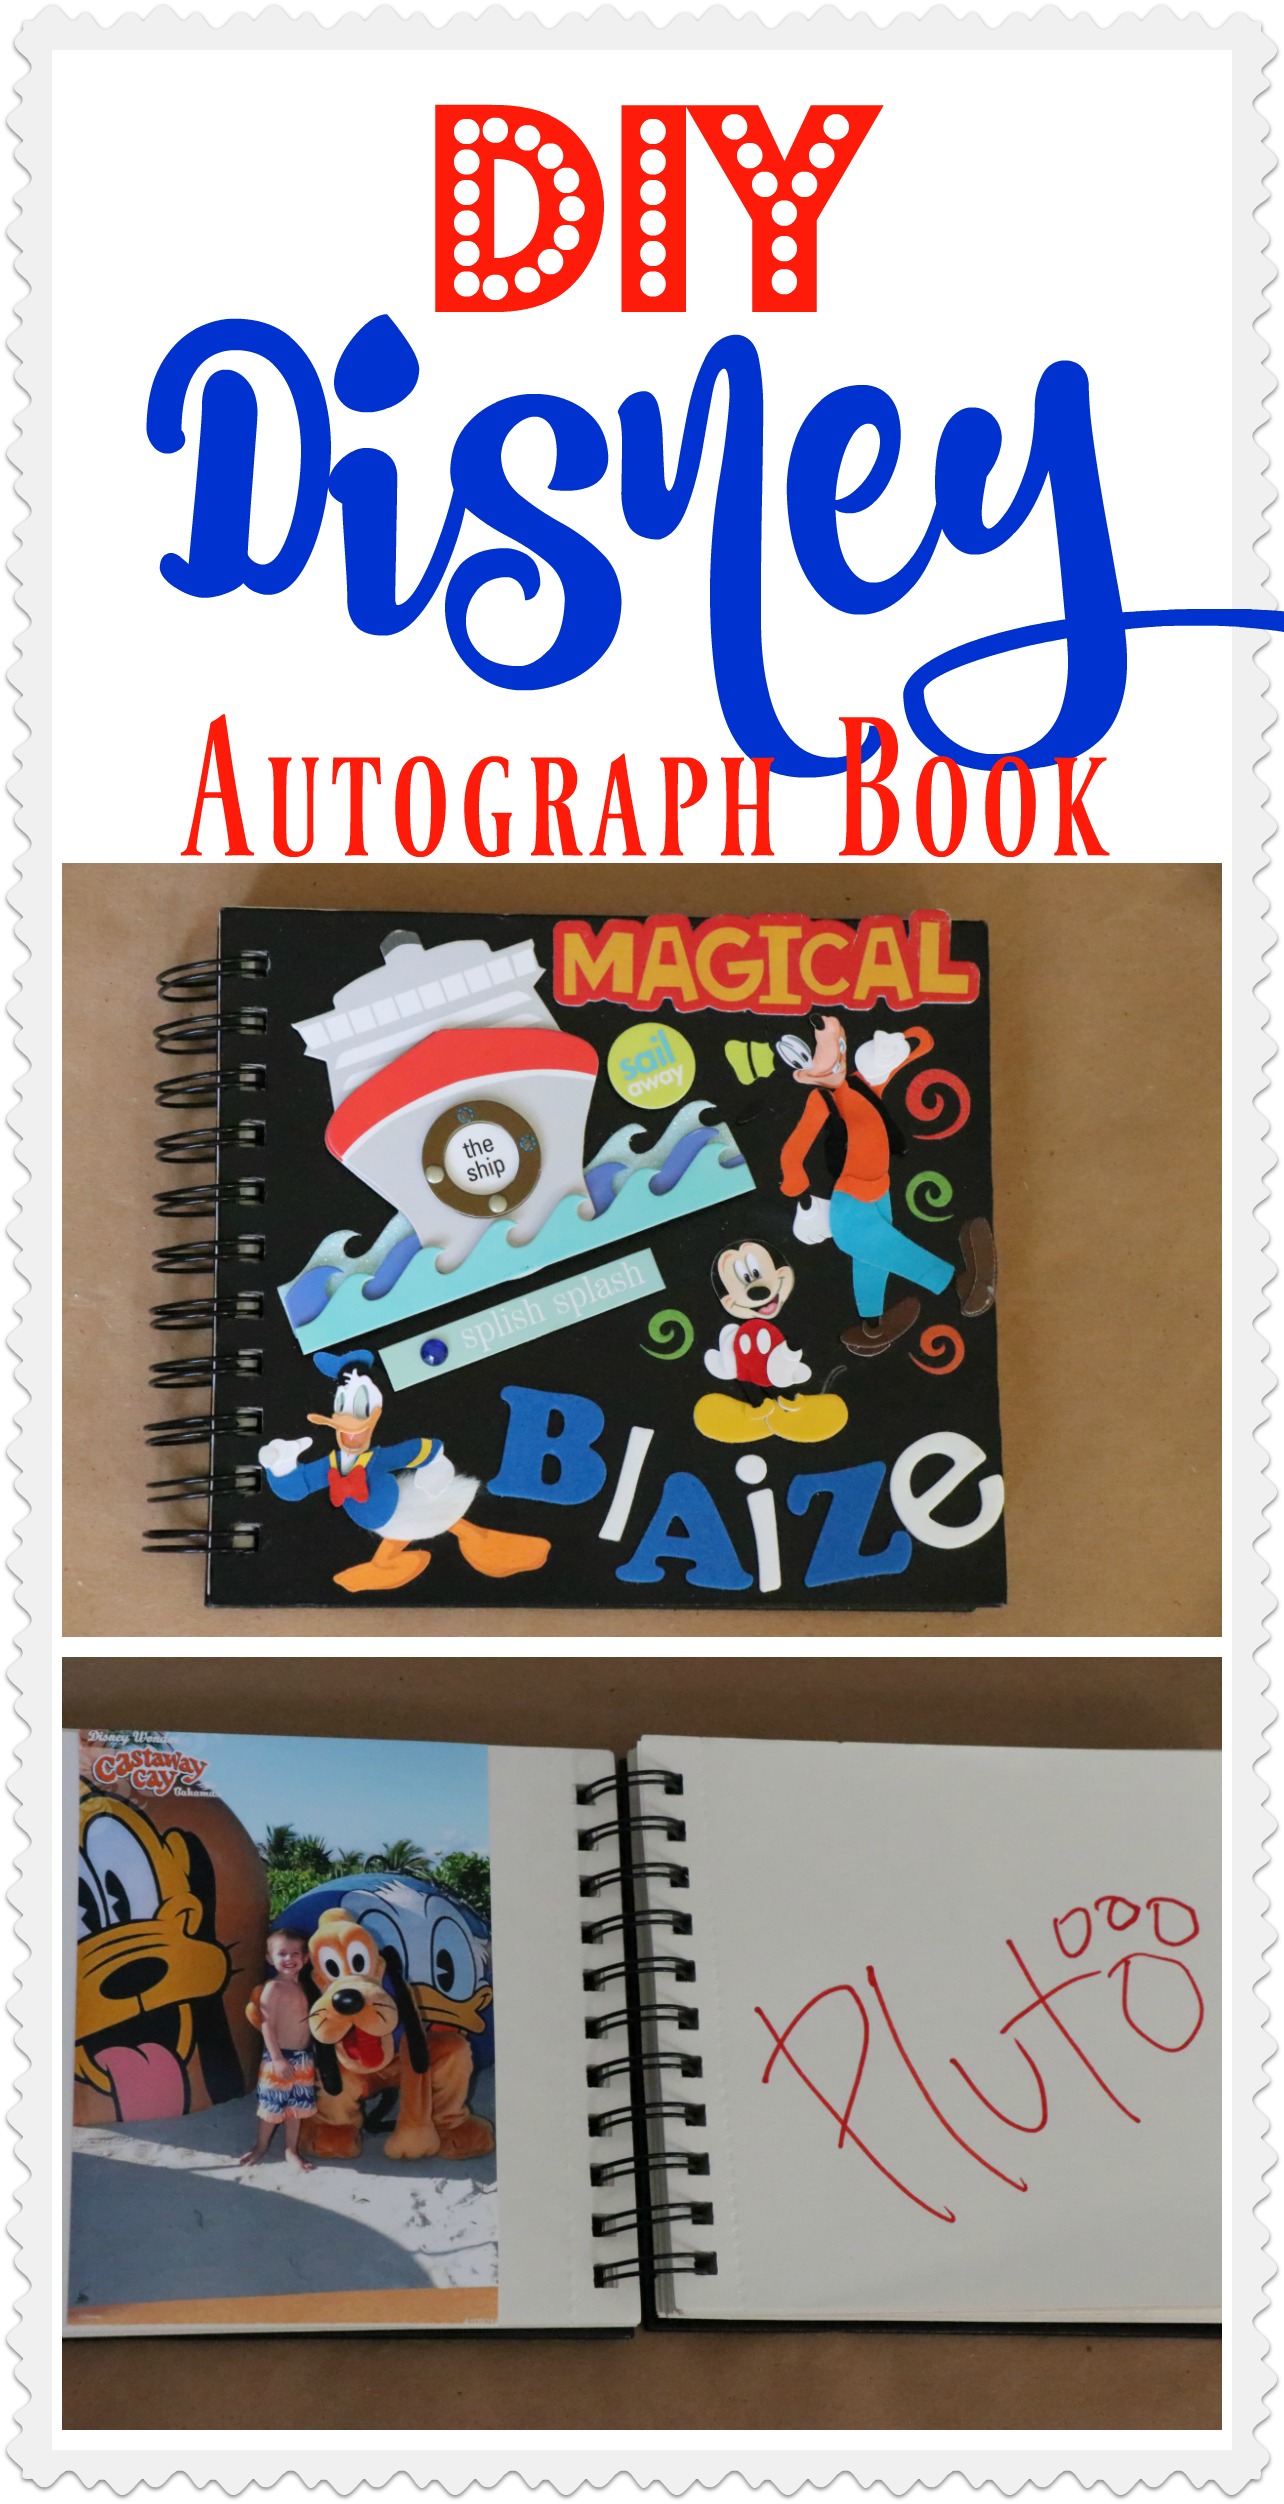 DIY Disney Autograph Books